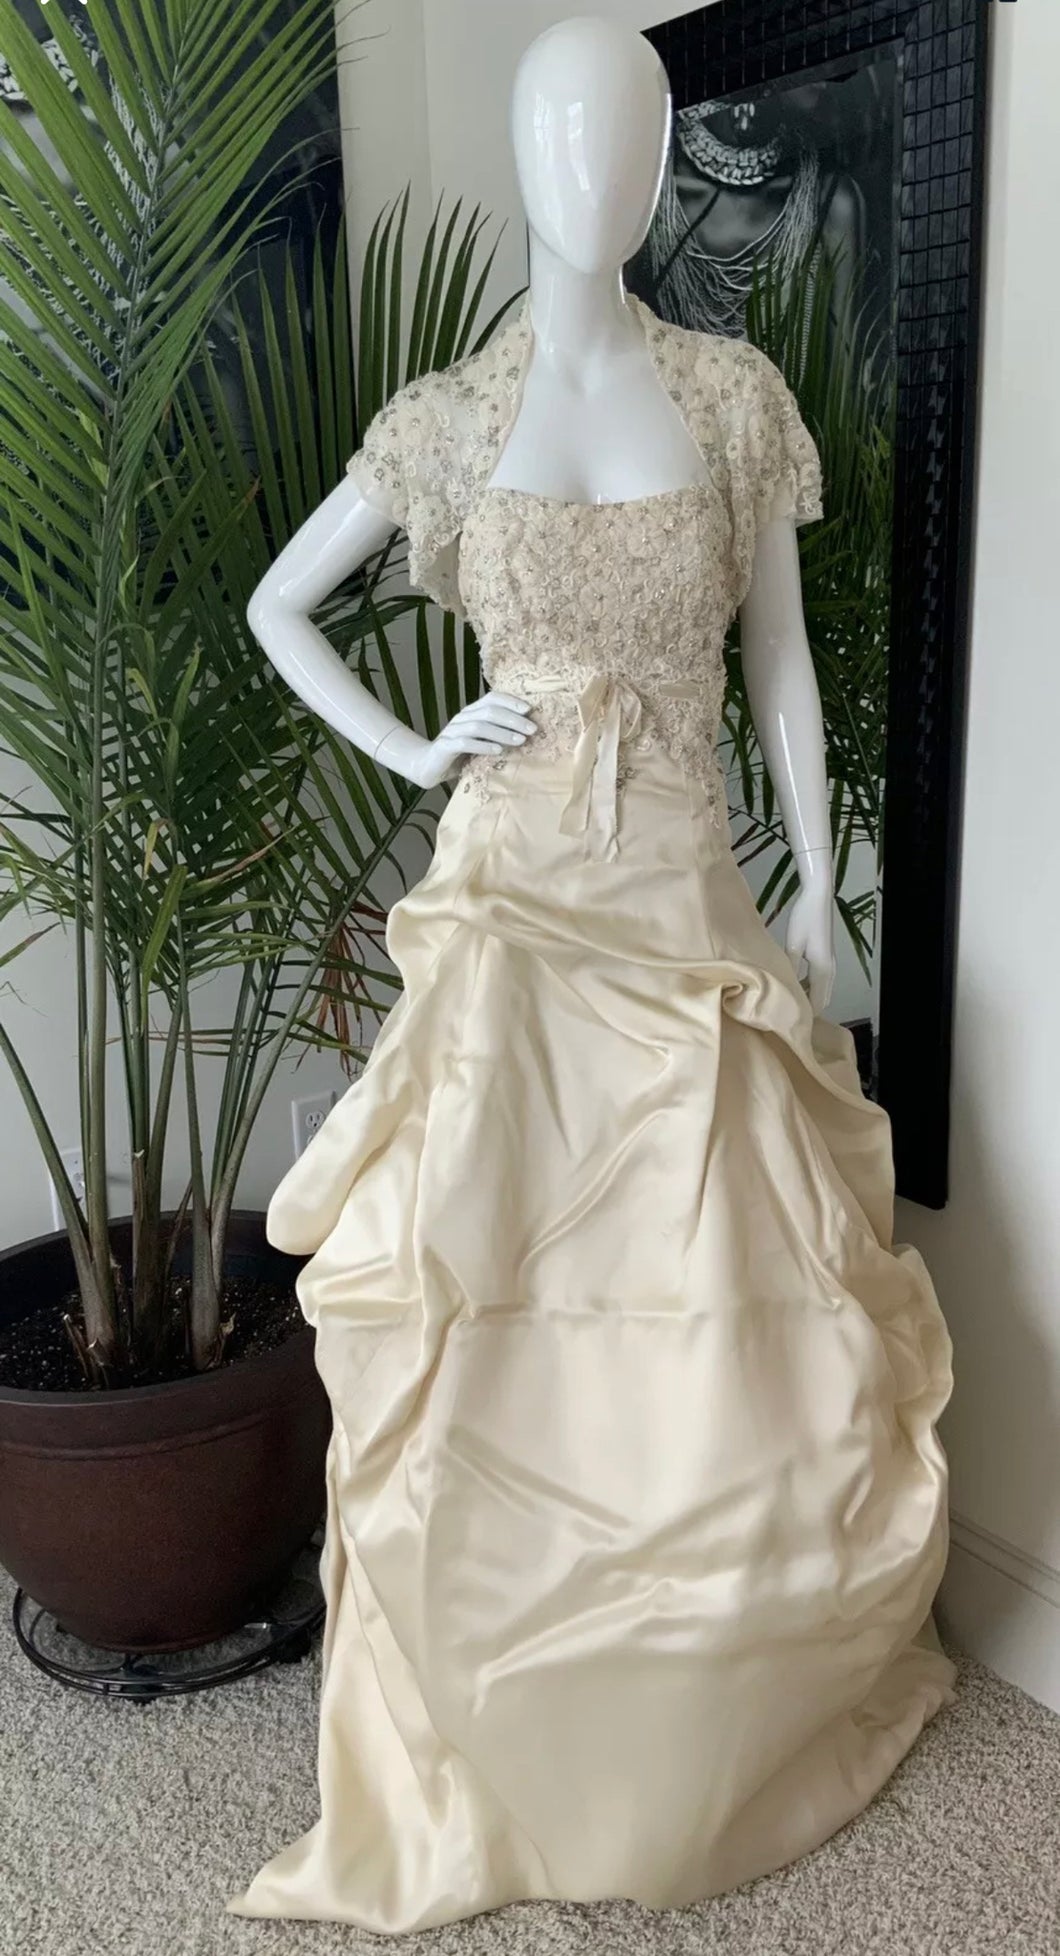 Monique Lhuillier ' Monique Lhuillier Champagne Organza Clementine Formal Wedding Dress w/ Jkt SZ12' wedding dress size-12 PREOWNED